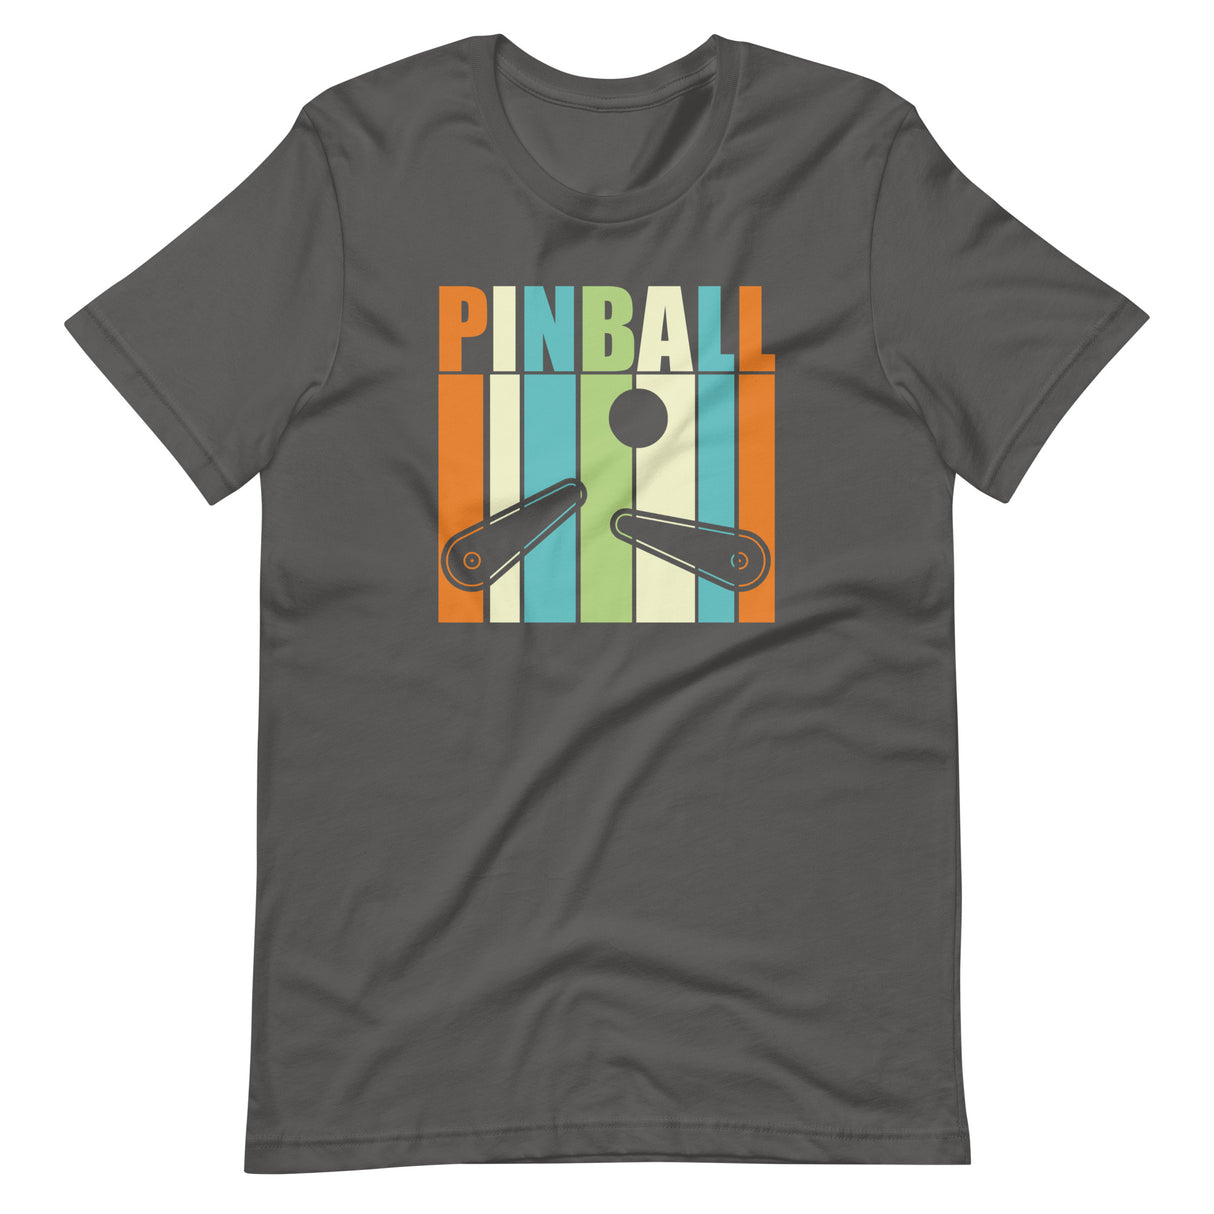 70s Bowling Alley Pinball Shirt